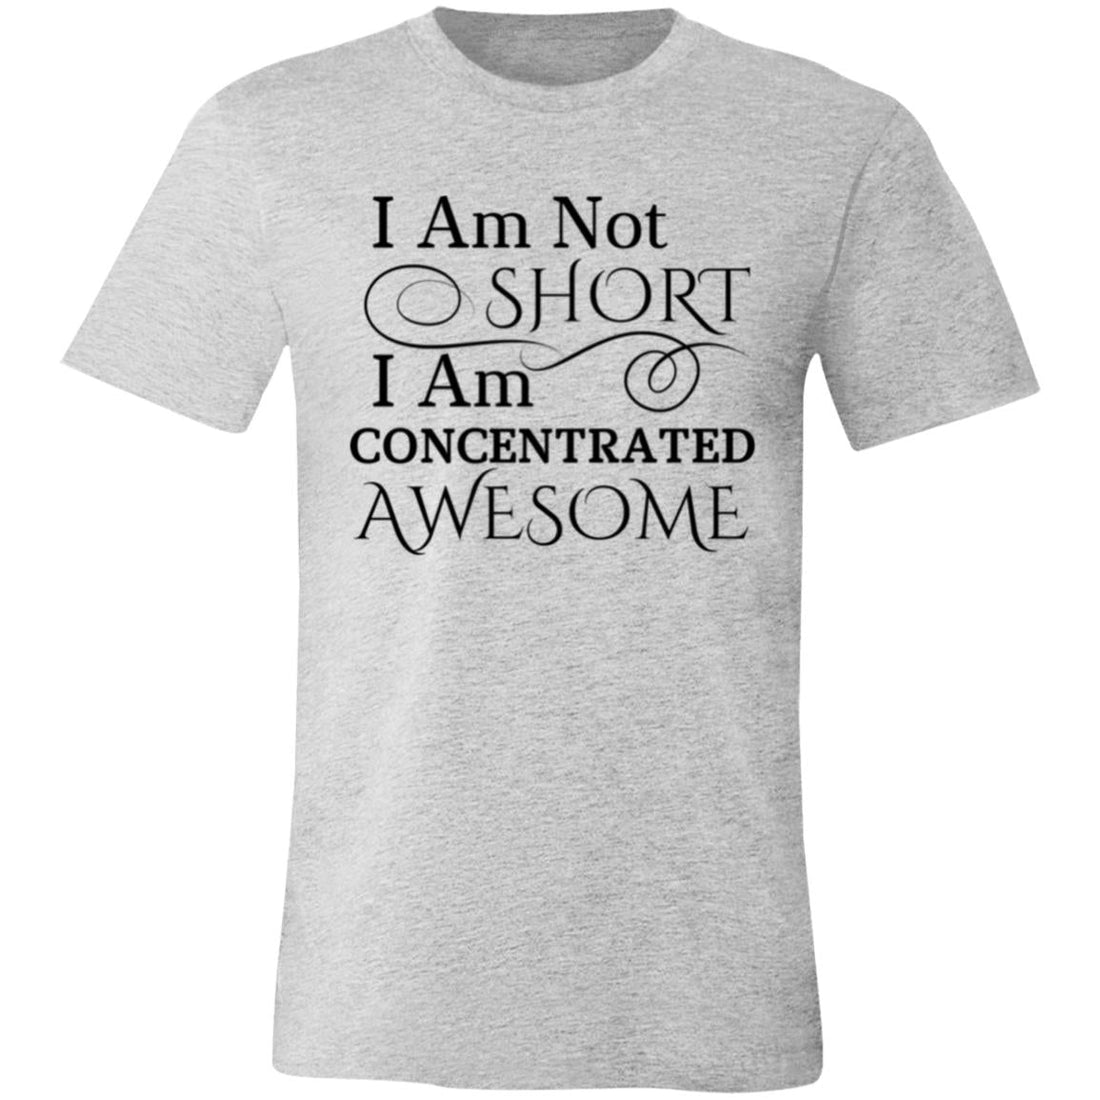 I Am Not Short T-Shirt - T-Shirts - Positively Sassy - I Am Not Short T-Shirt